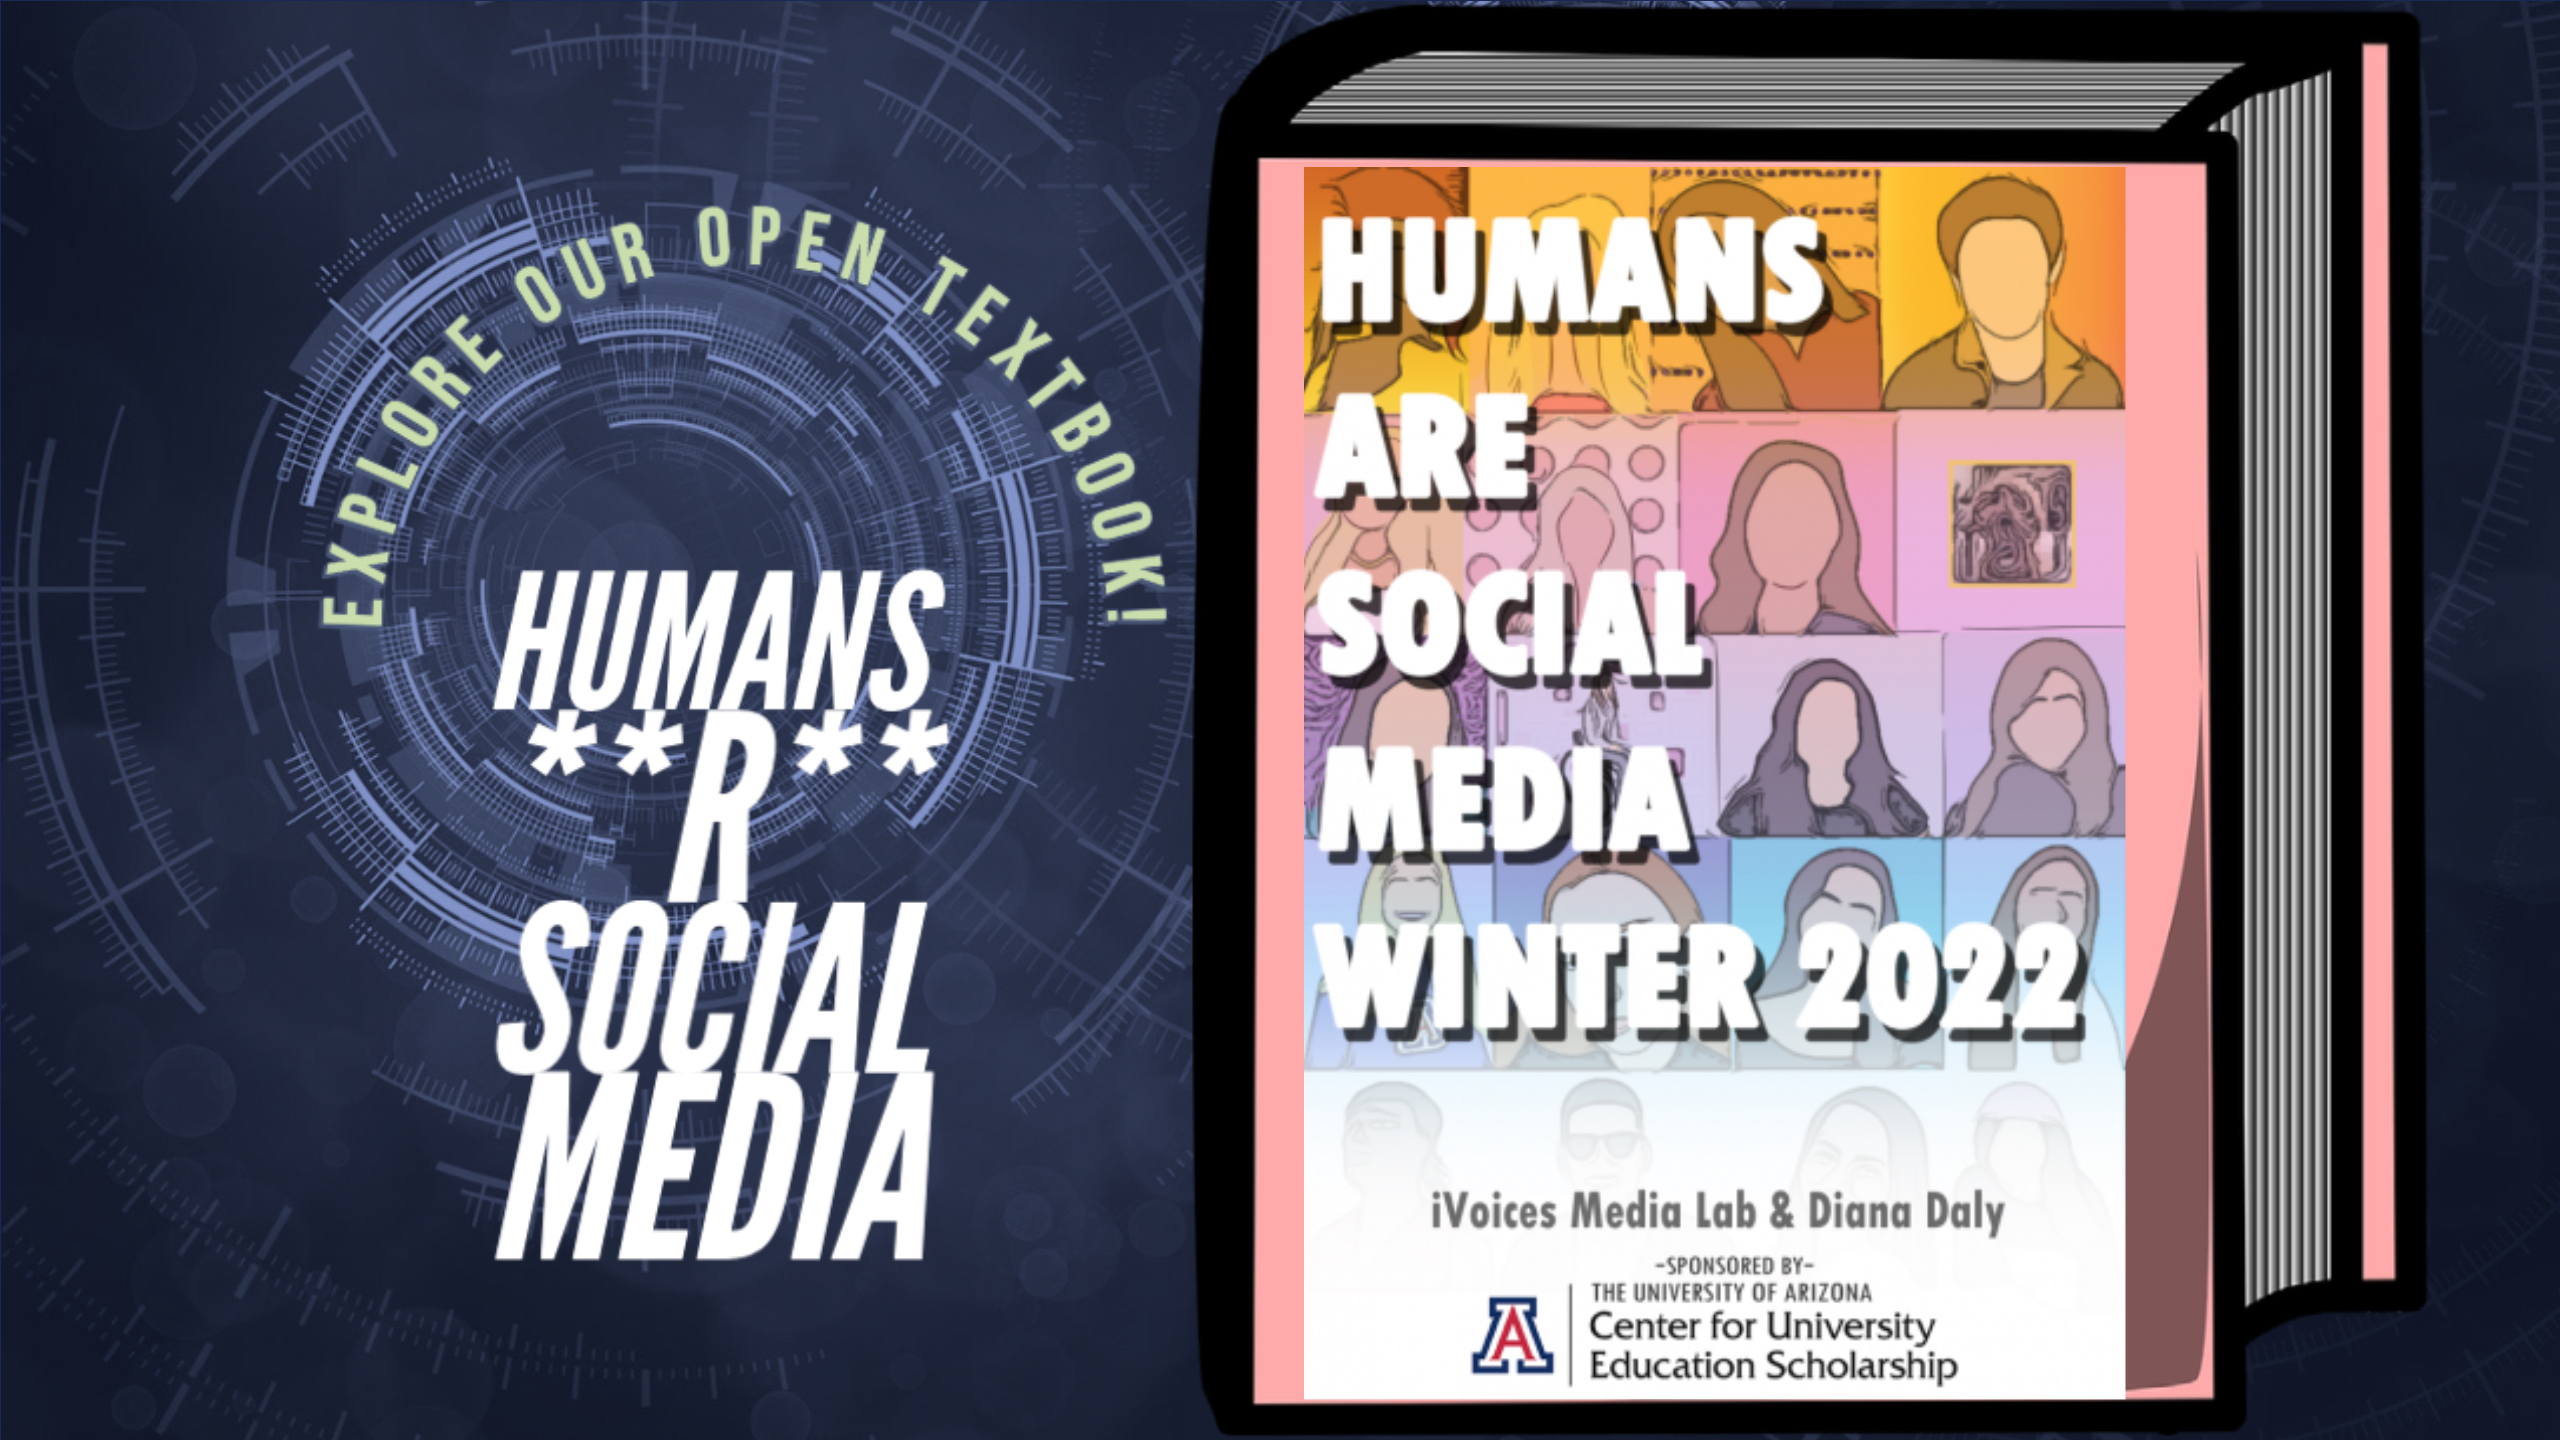 Explore our open textbook Humans R Social Media